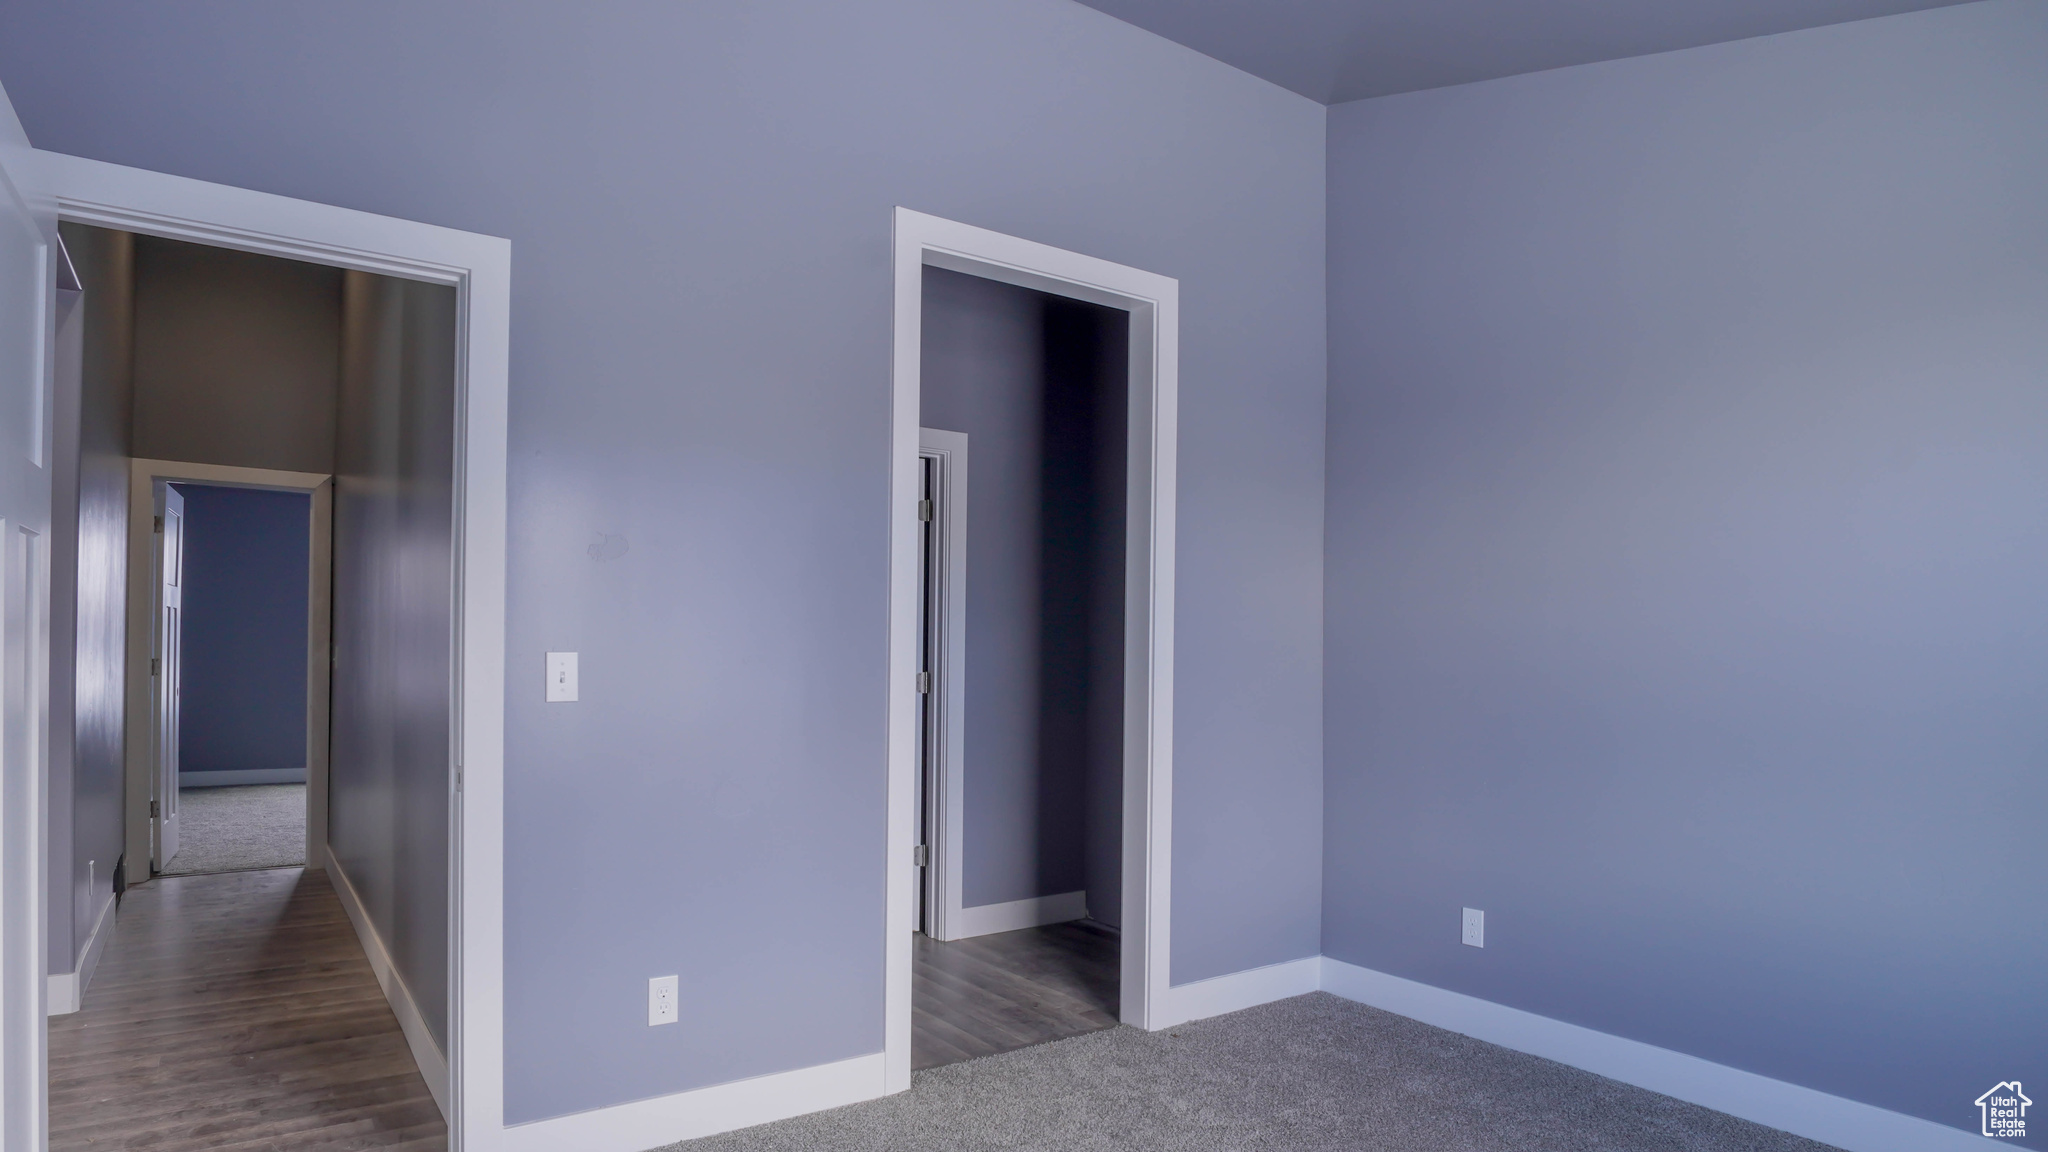 Unfurnished bedroom with dark colored carpet